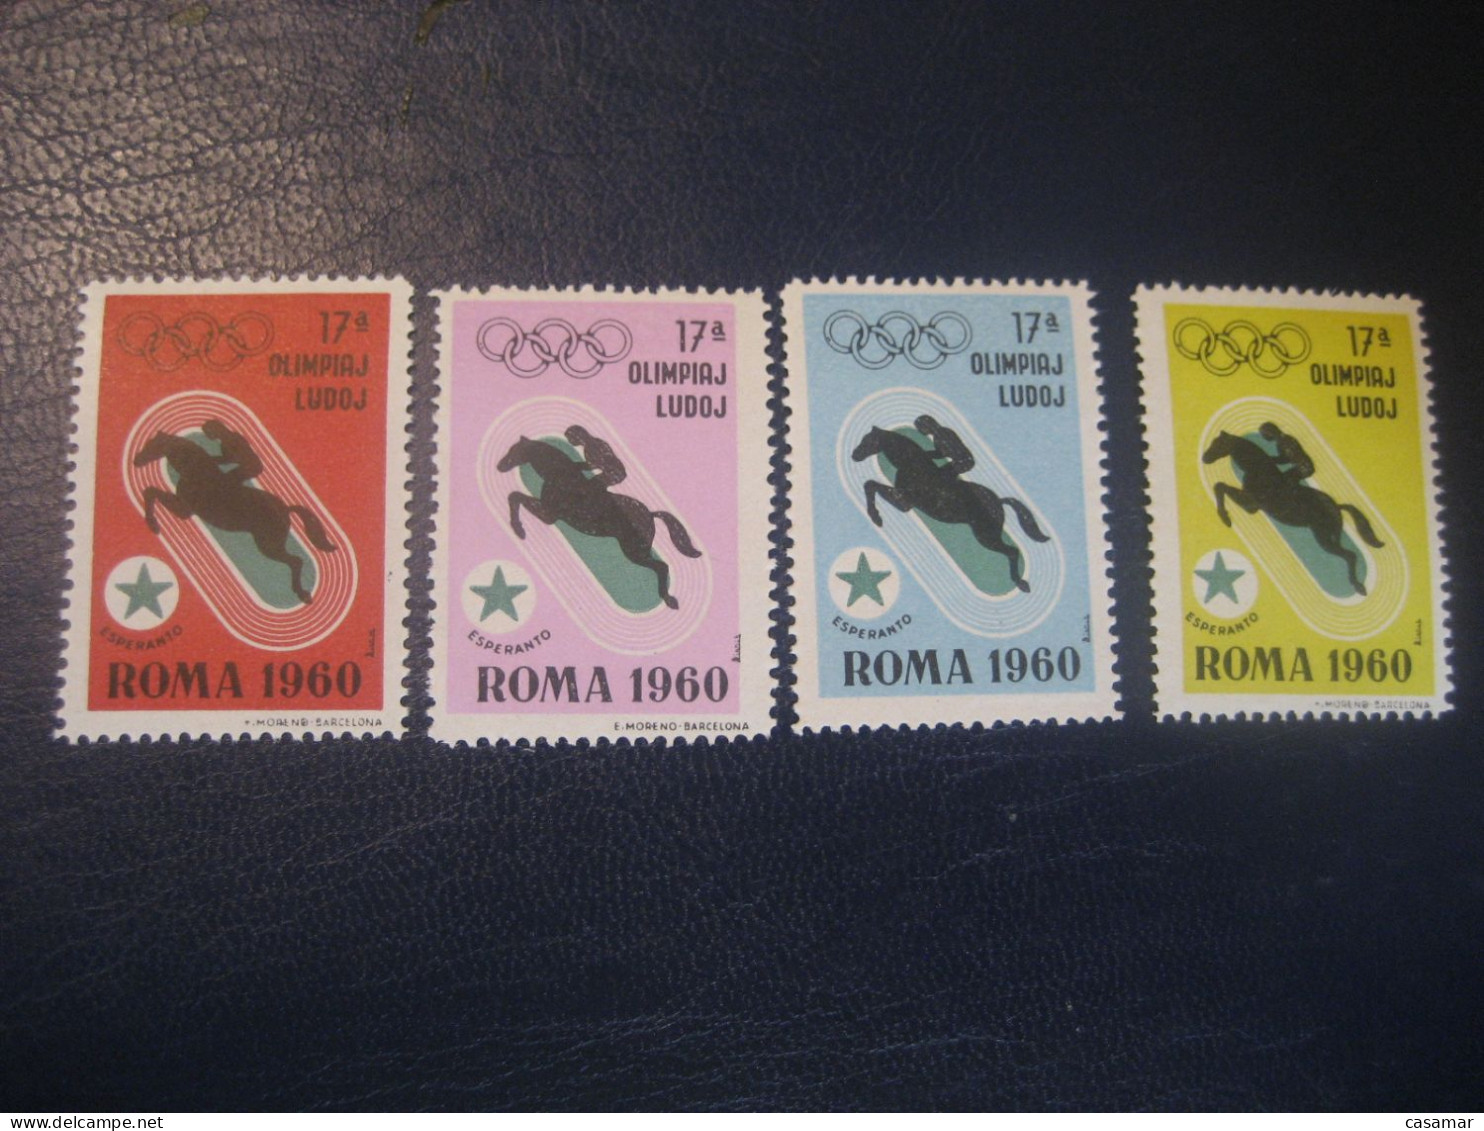 ROMA 1960 Equestrian Equitation Horse Olympic Games Olympics Esperanto 4 Poster Stamp Vignette ITALY Spain Label - Reitsport